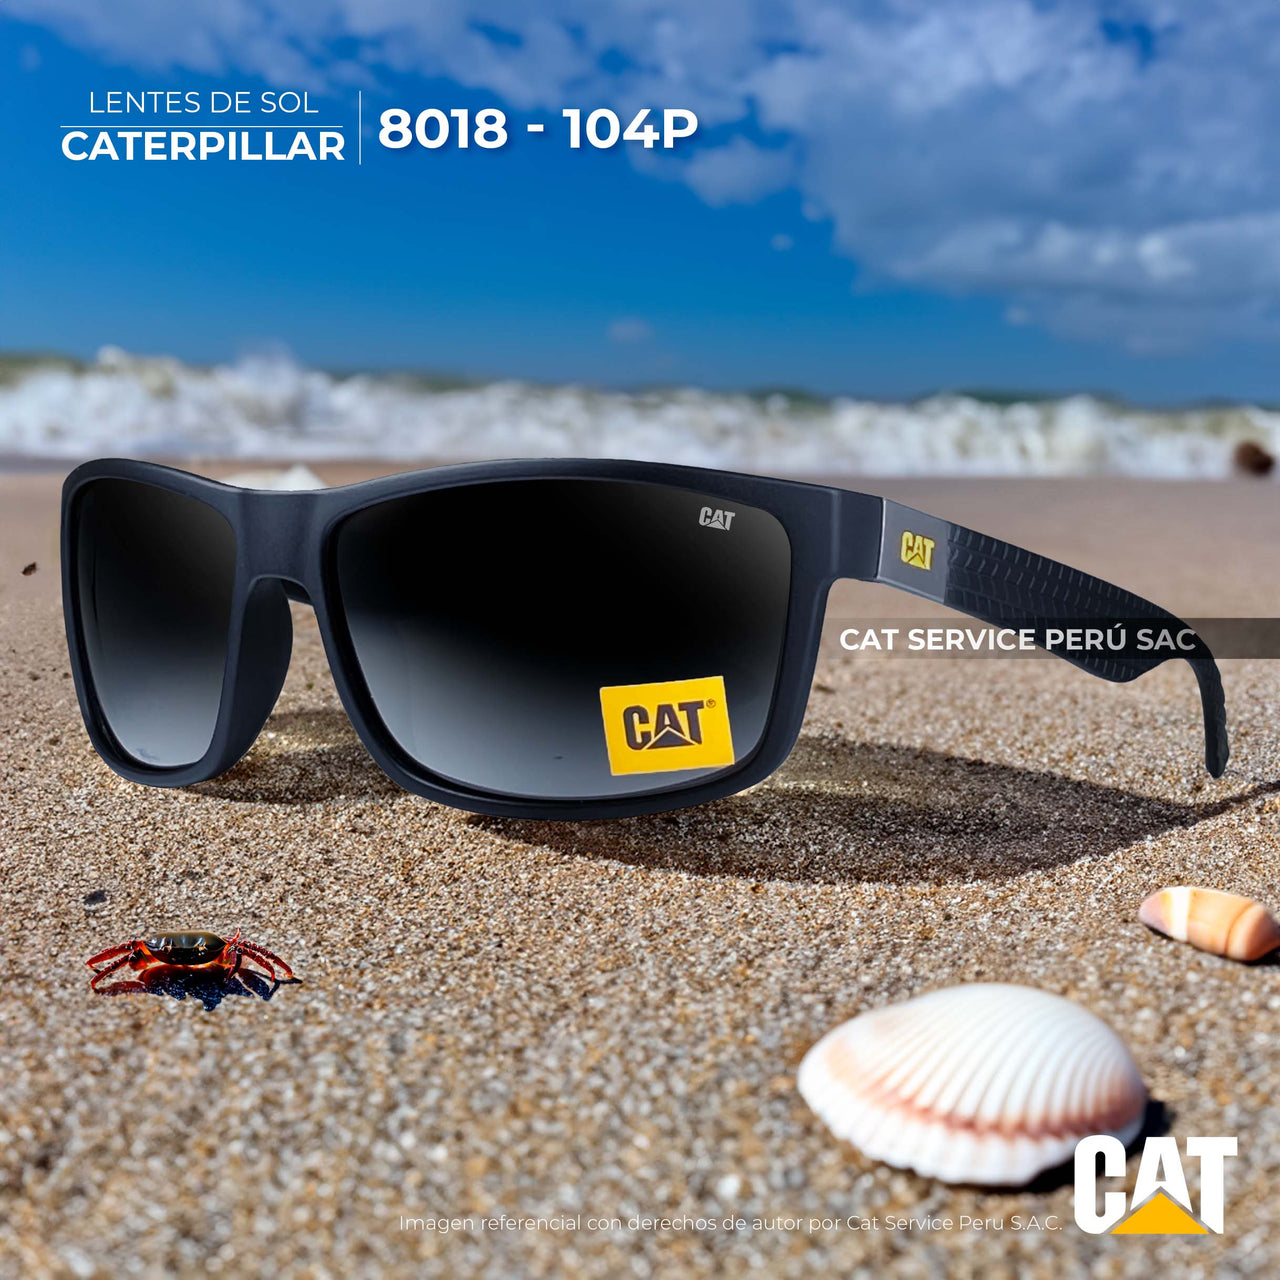 Cat CTS-8018-104P Polarized Black Moon Sunglasses 